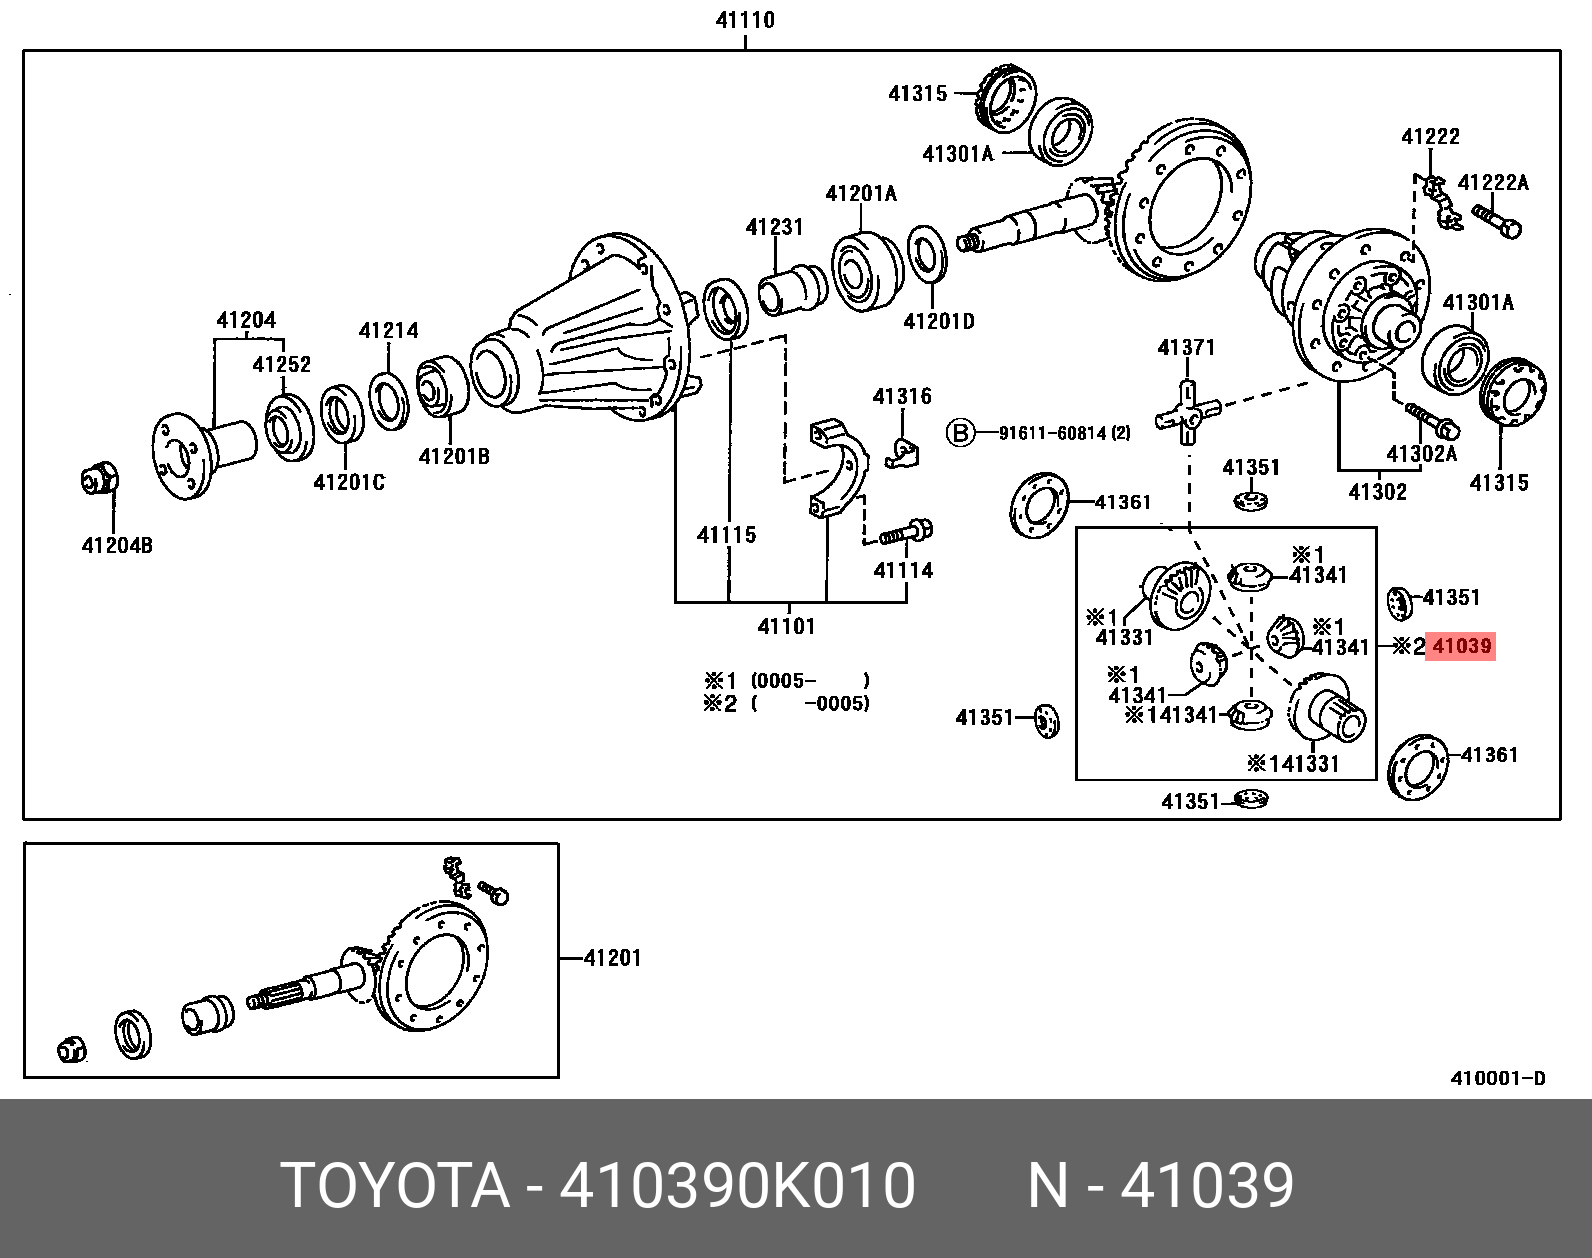 Proteção Direta ao Injetor, Diesel Tunap 984 - Mirai Peças Toyota